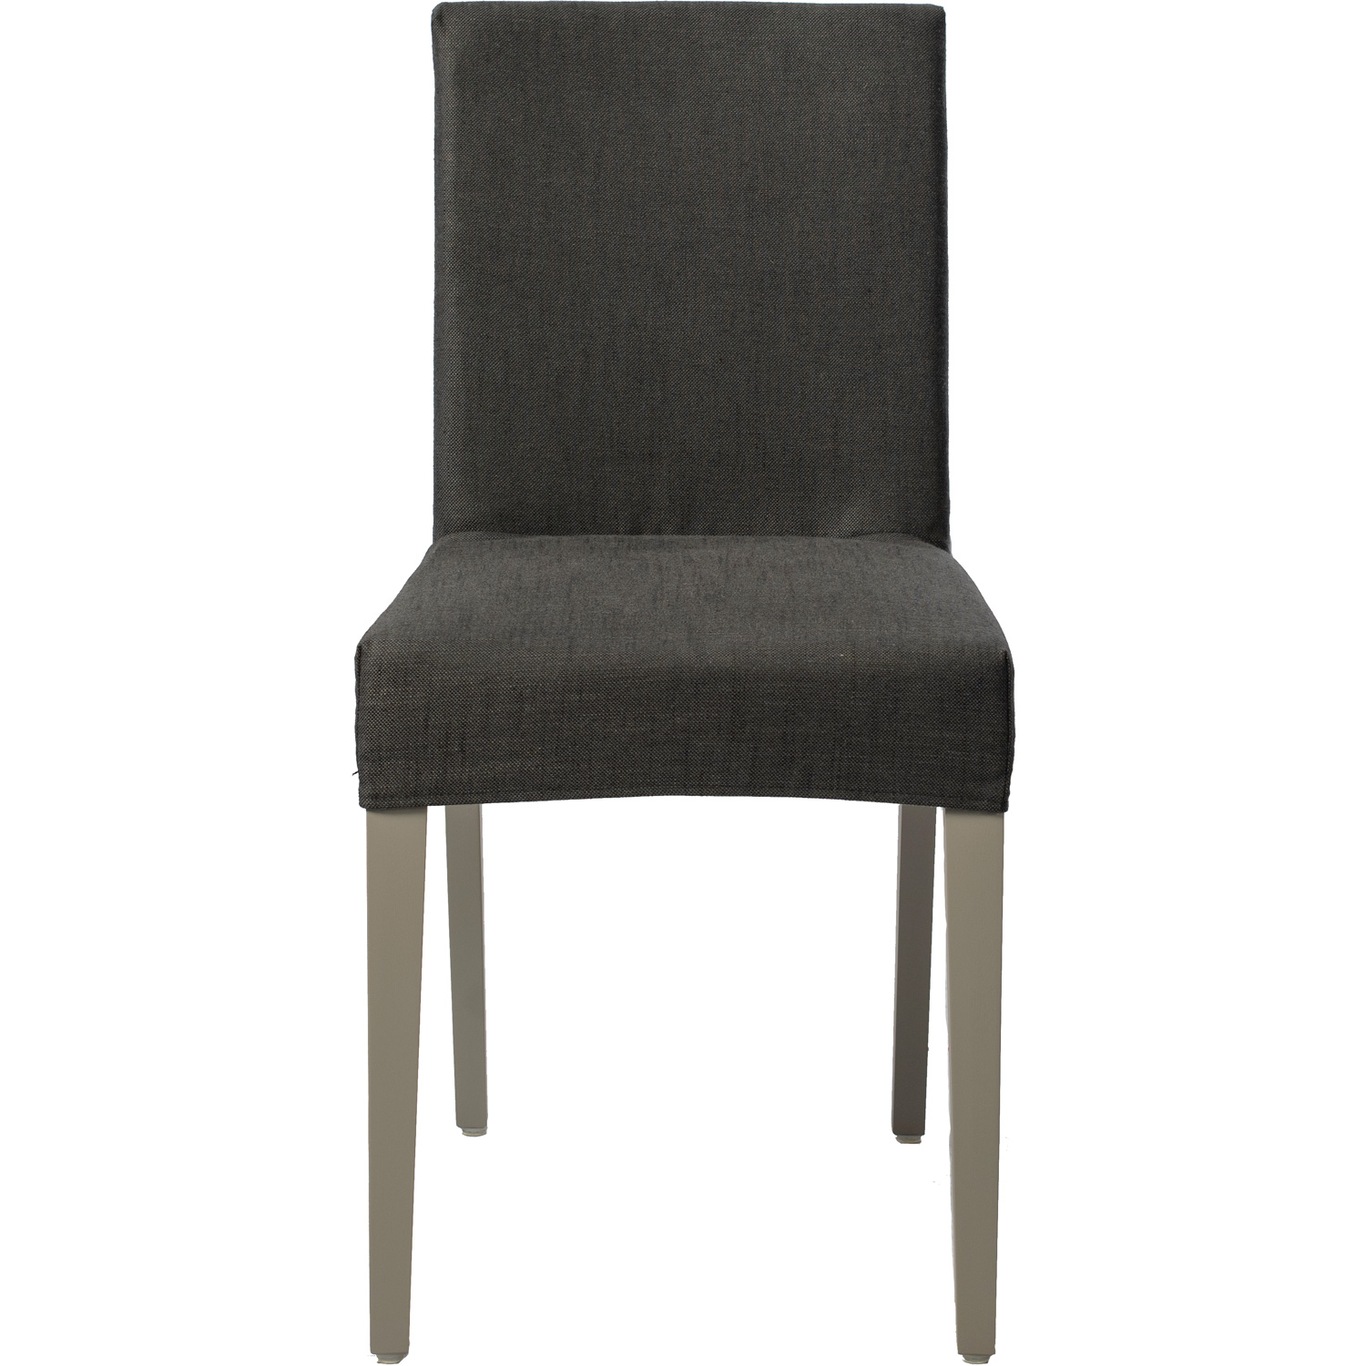 Edge Chair, Grey / Piquet Anthracite 67